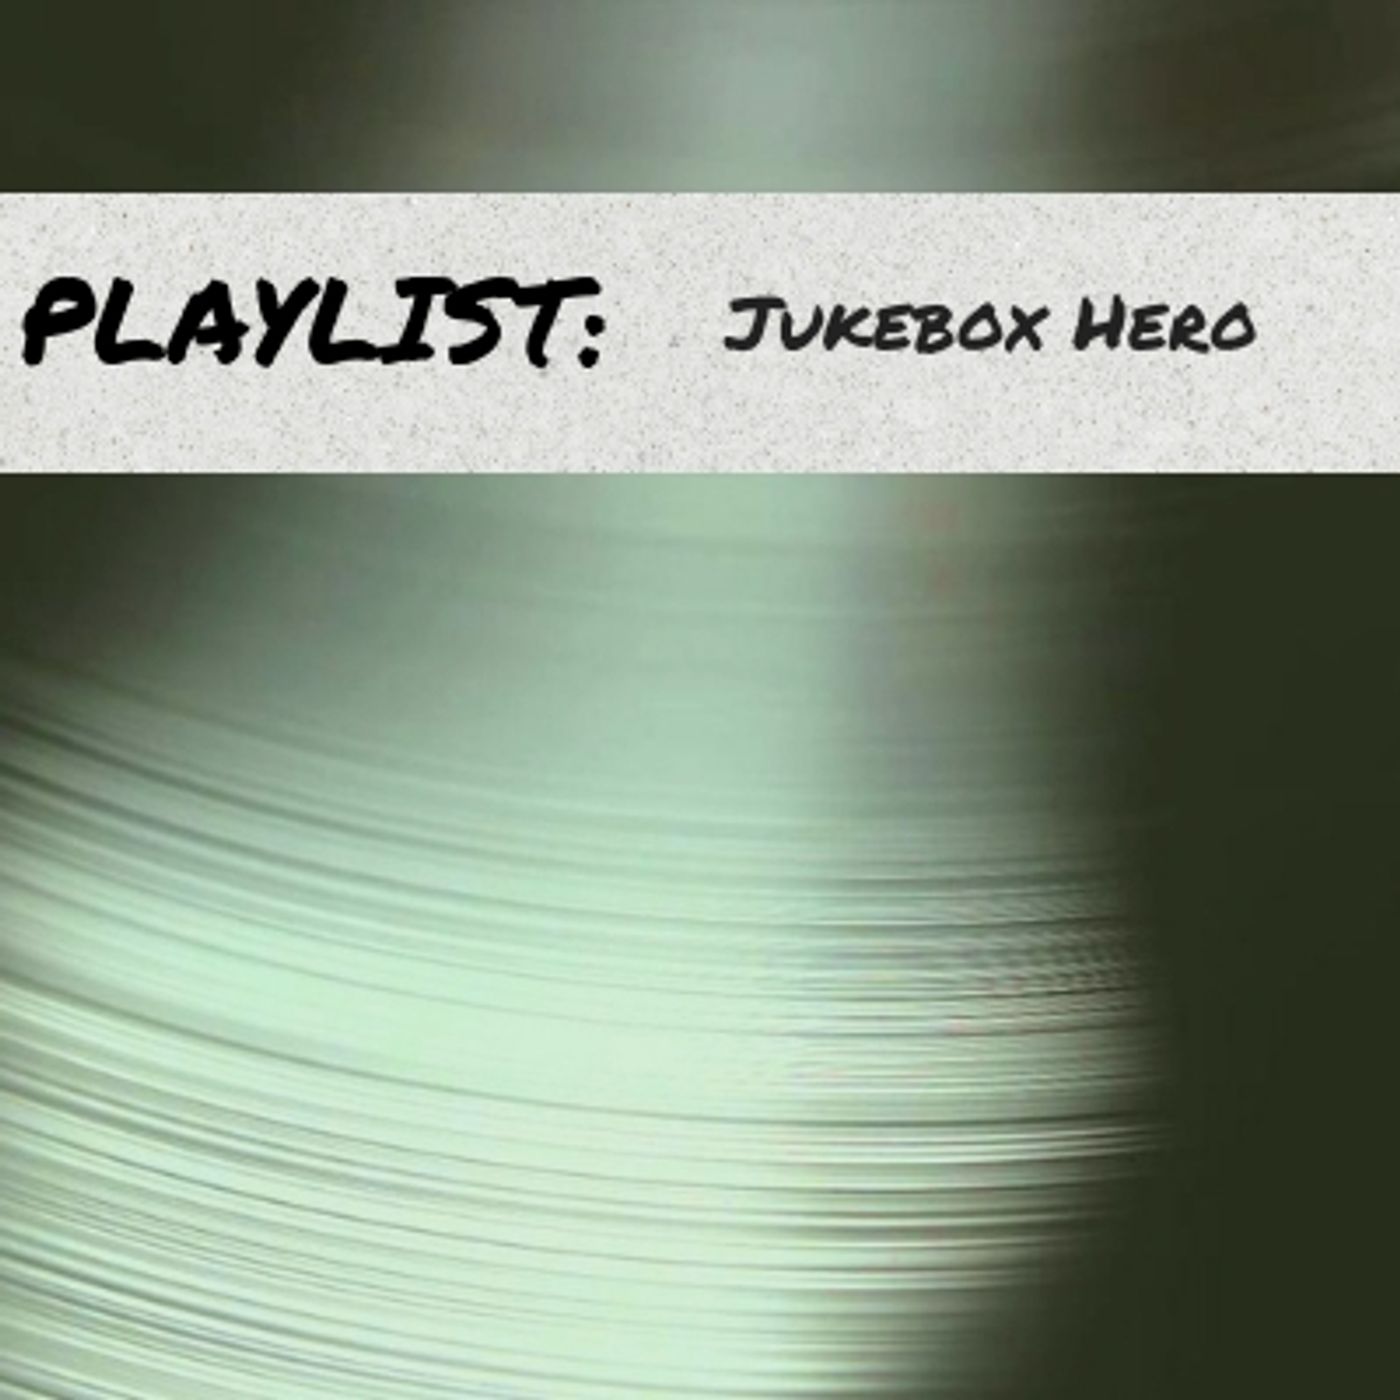 5.11 Jukebox Hero